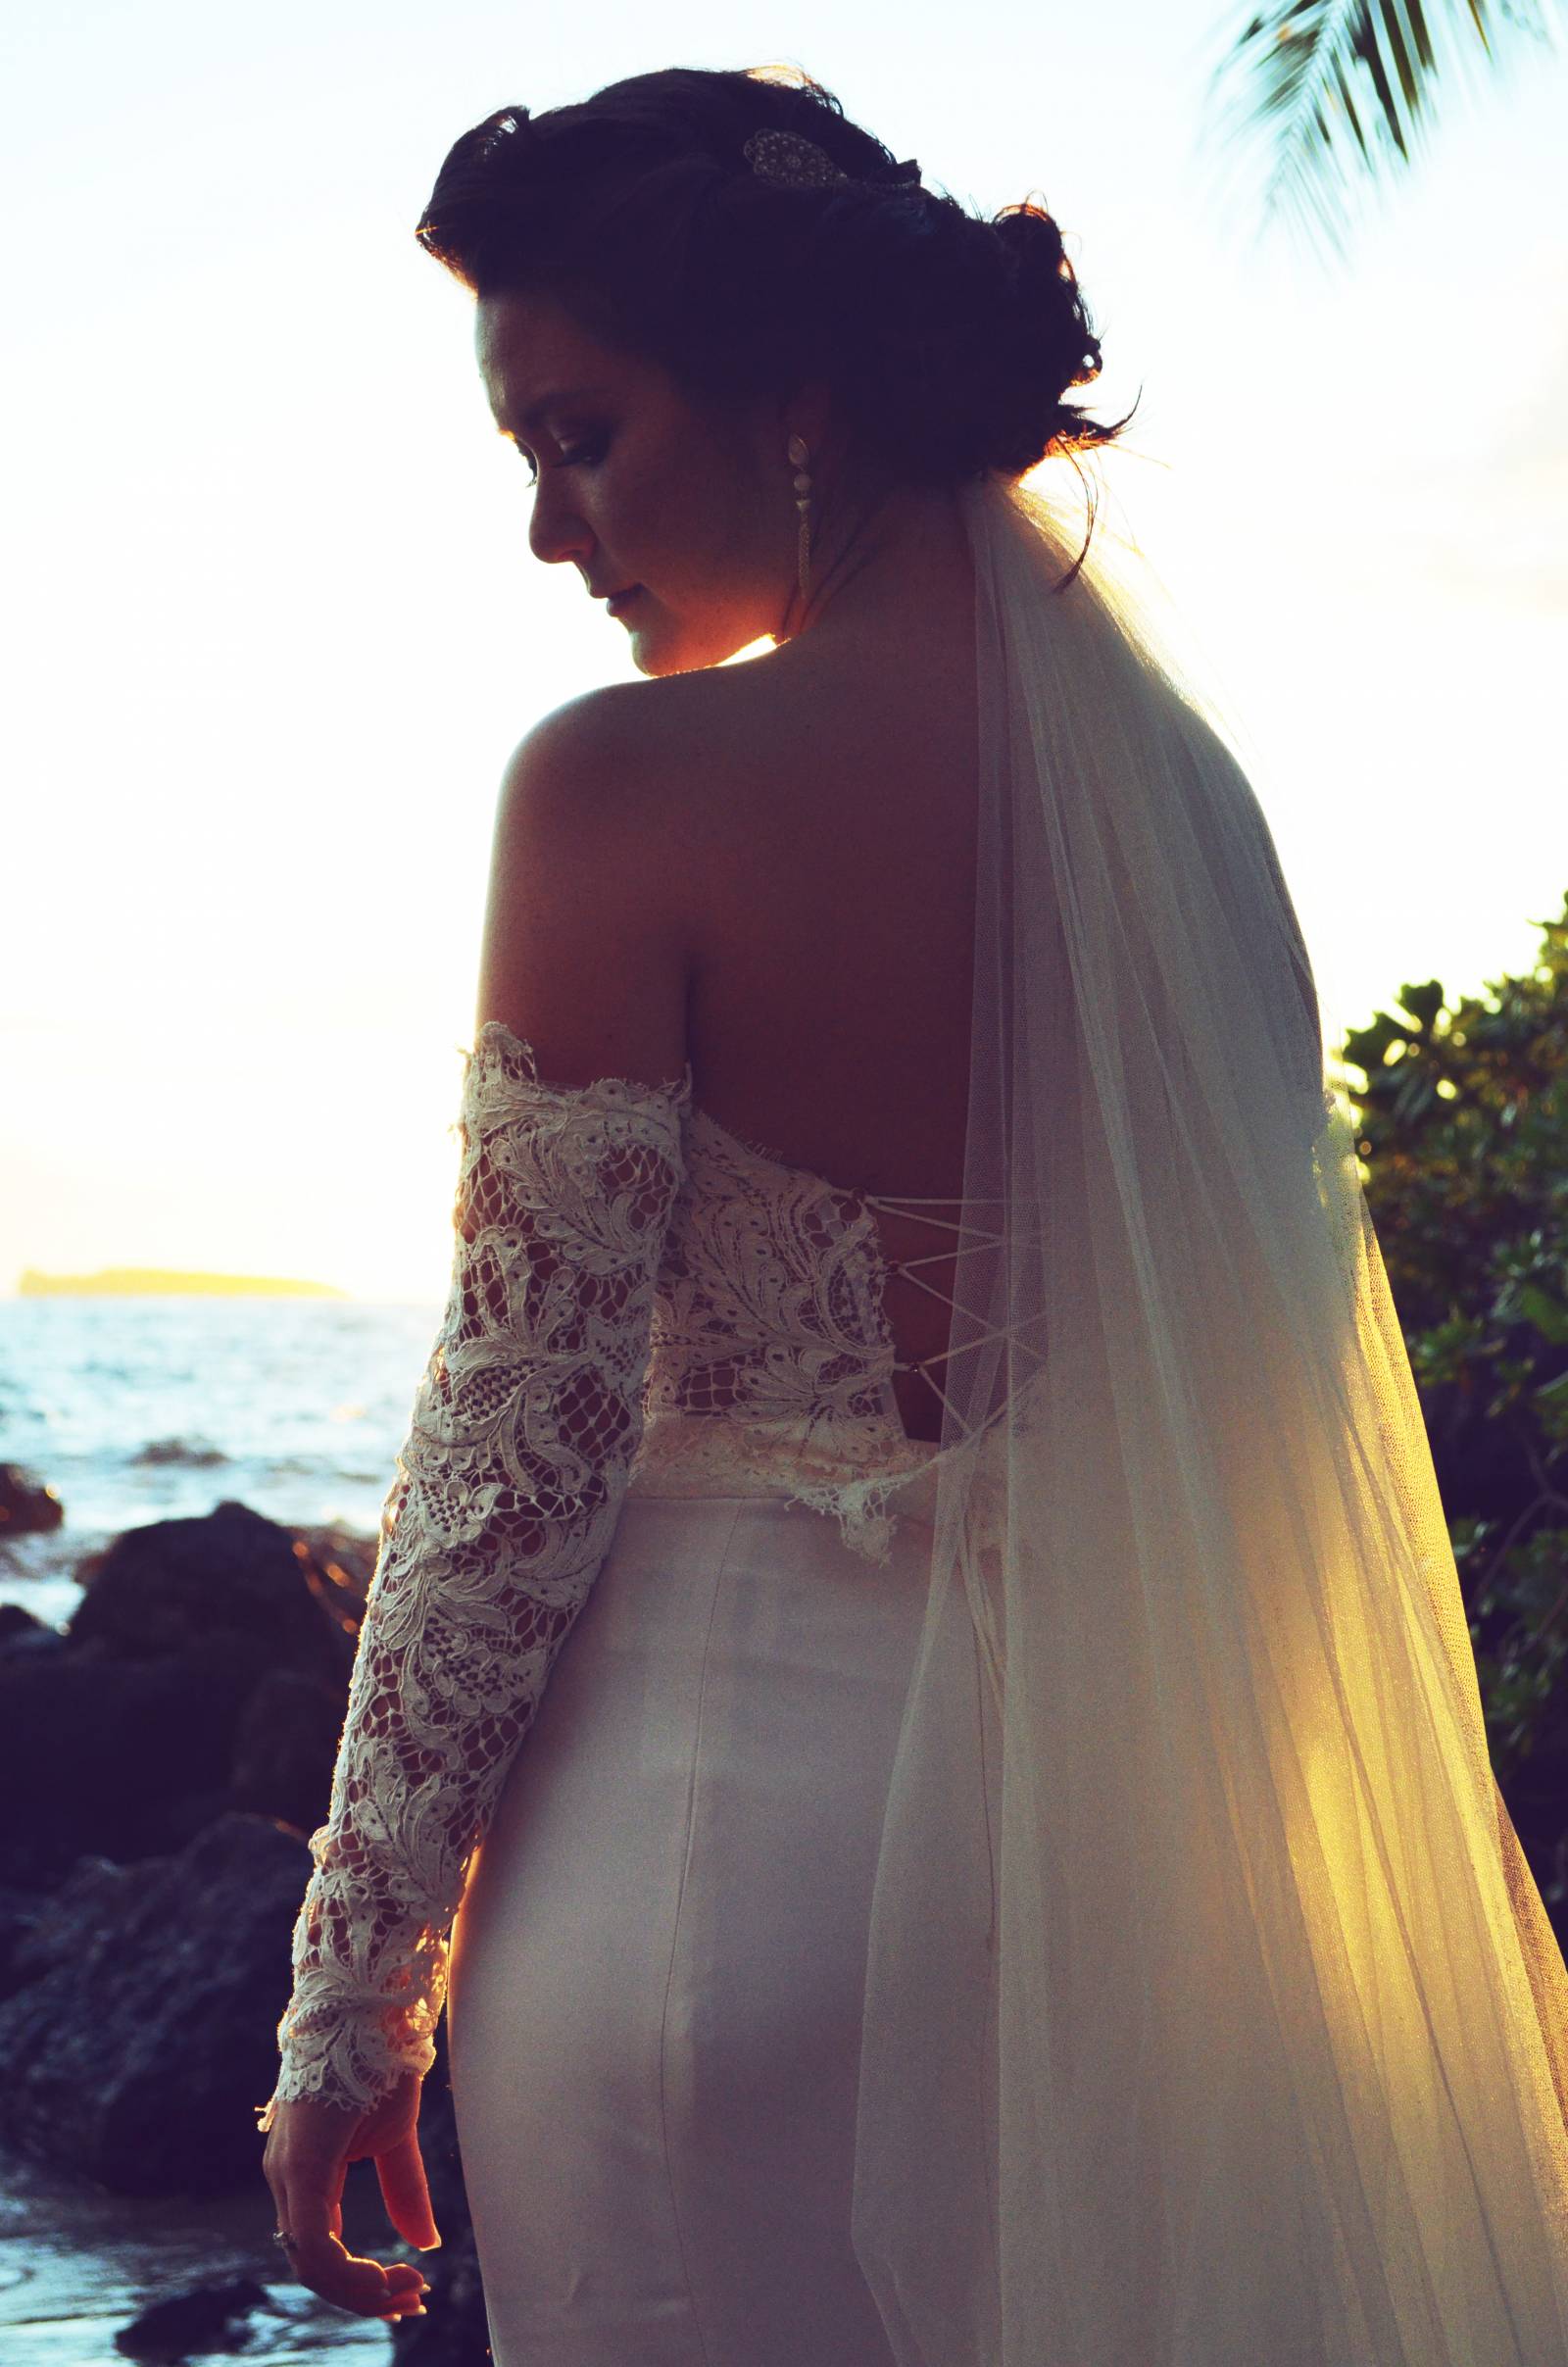 Tropical Maui Oceanfront Estate Wedding